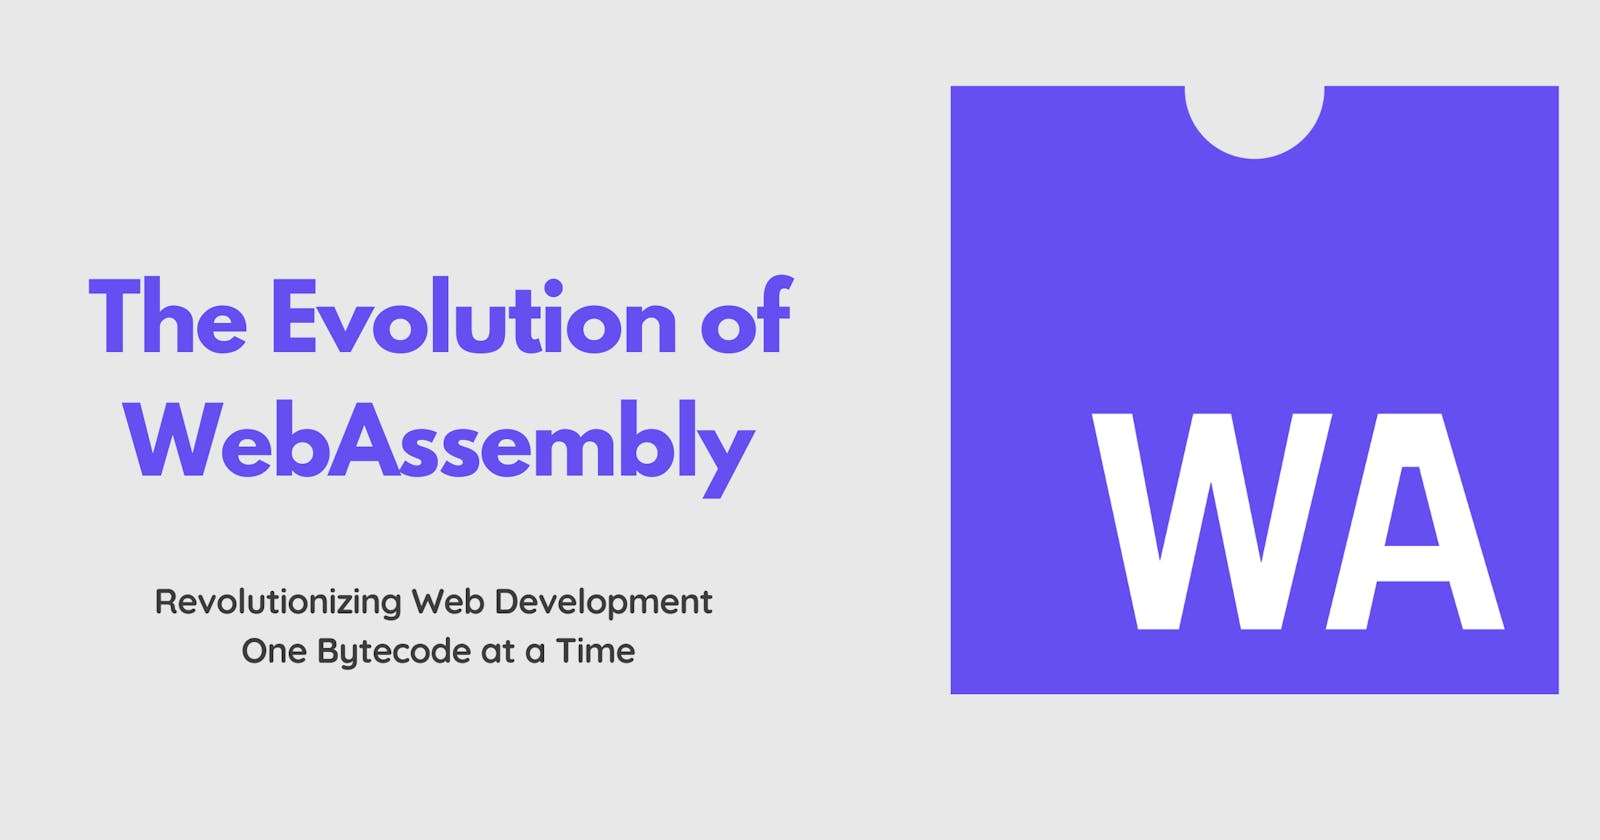 The Evolution of WebAssembly